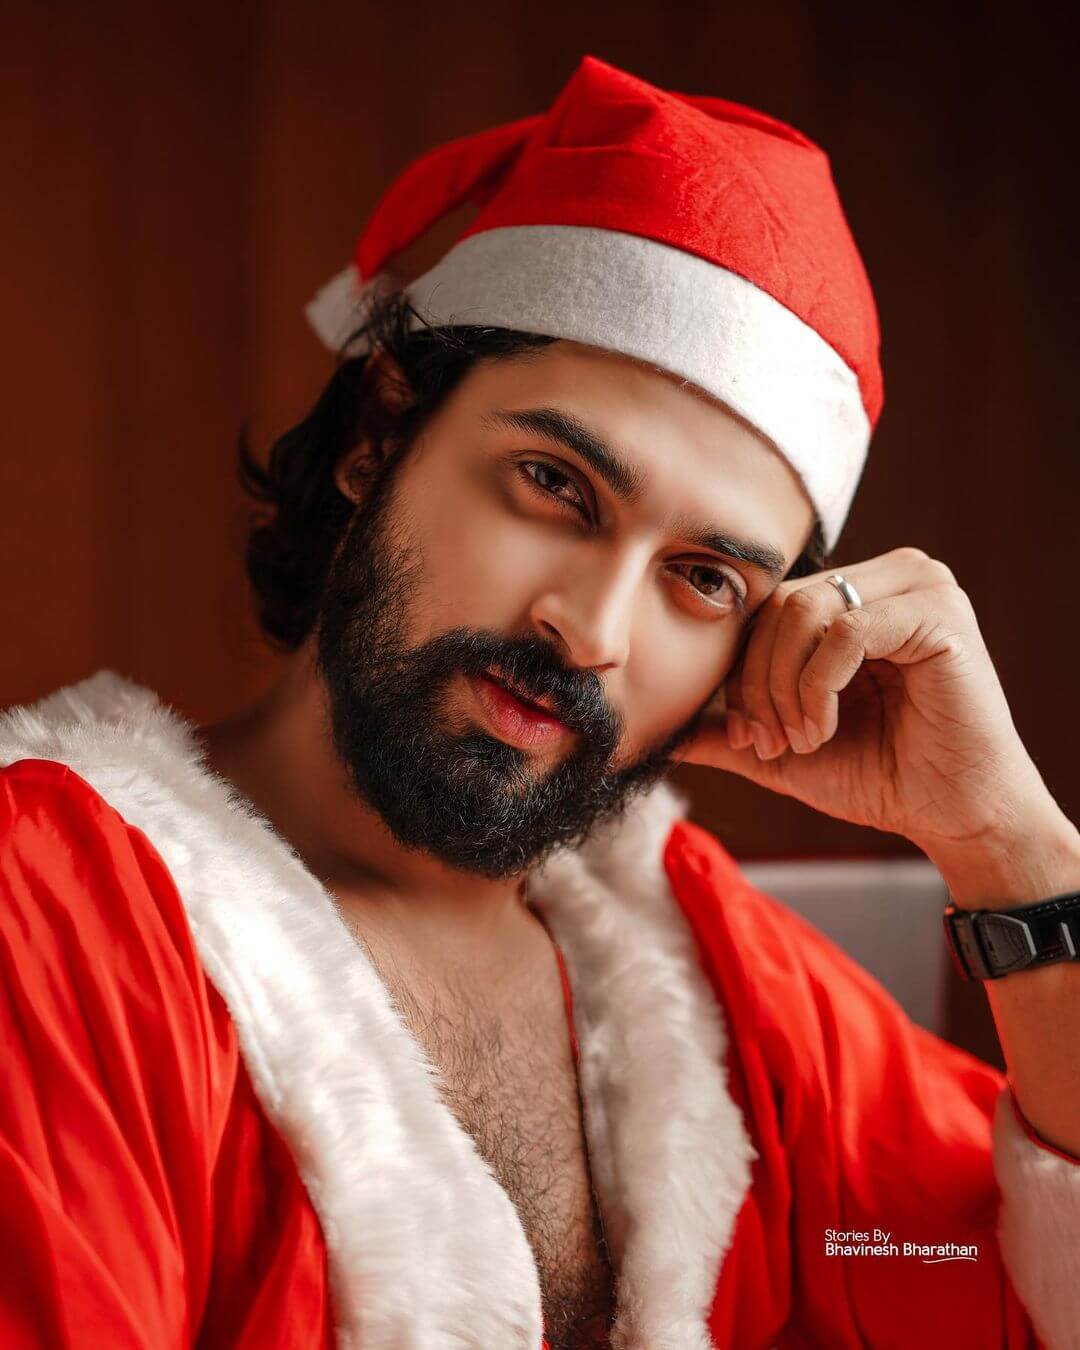 Dev Mohan as Santa Claus